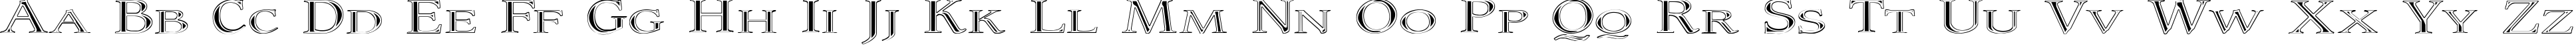 Пример написания английского алфавита шрифтом Coltaine No 1